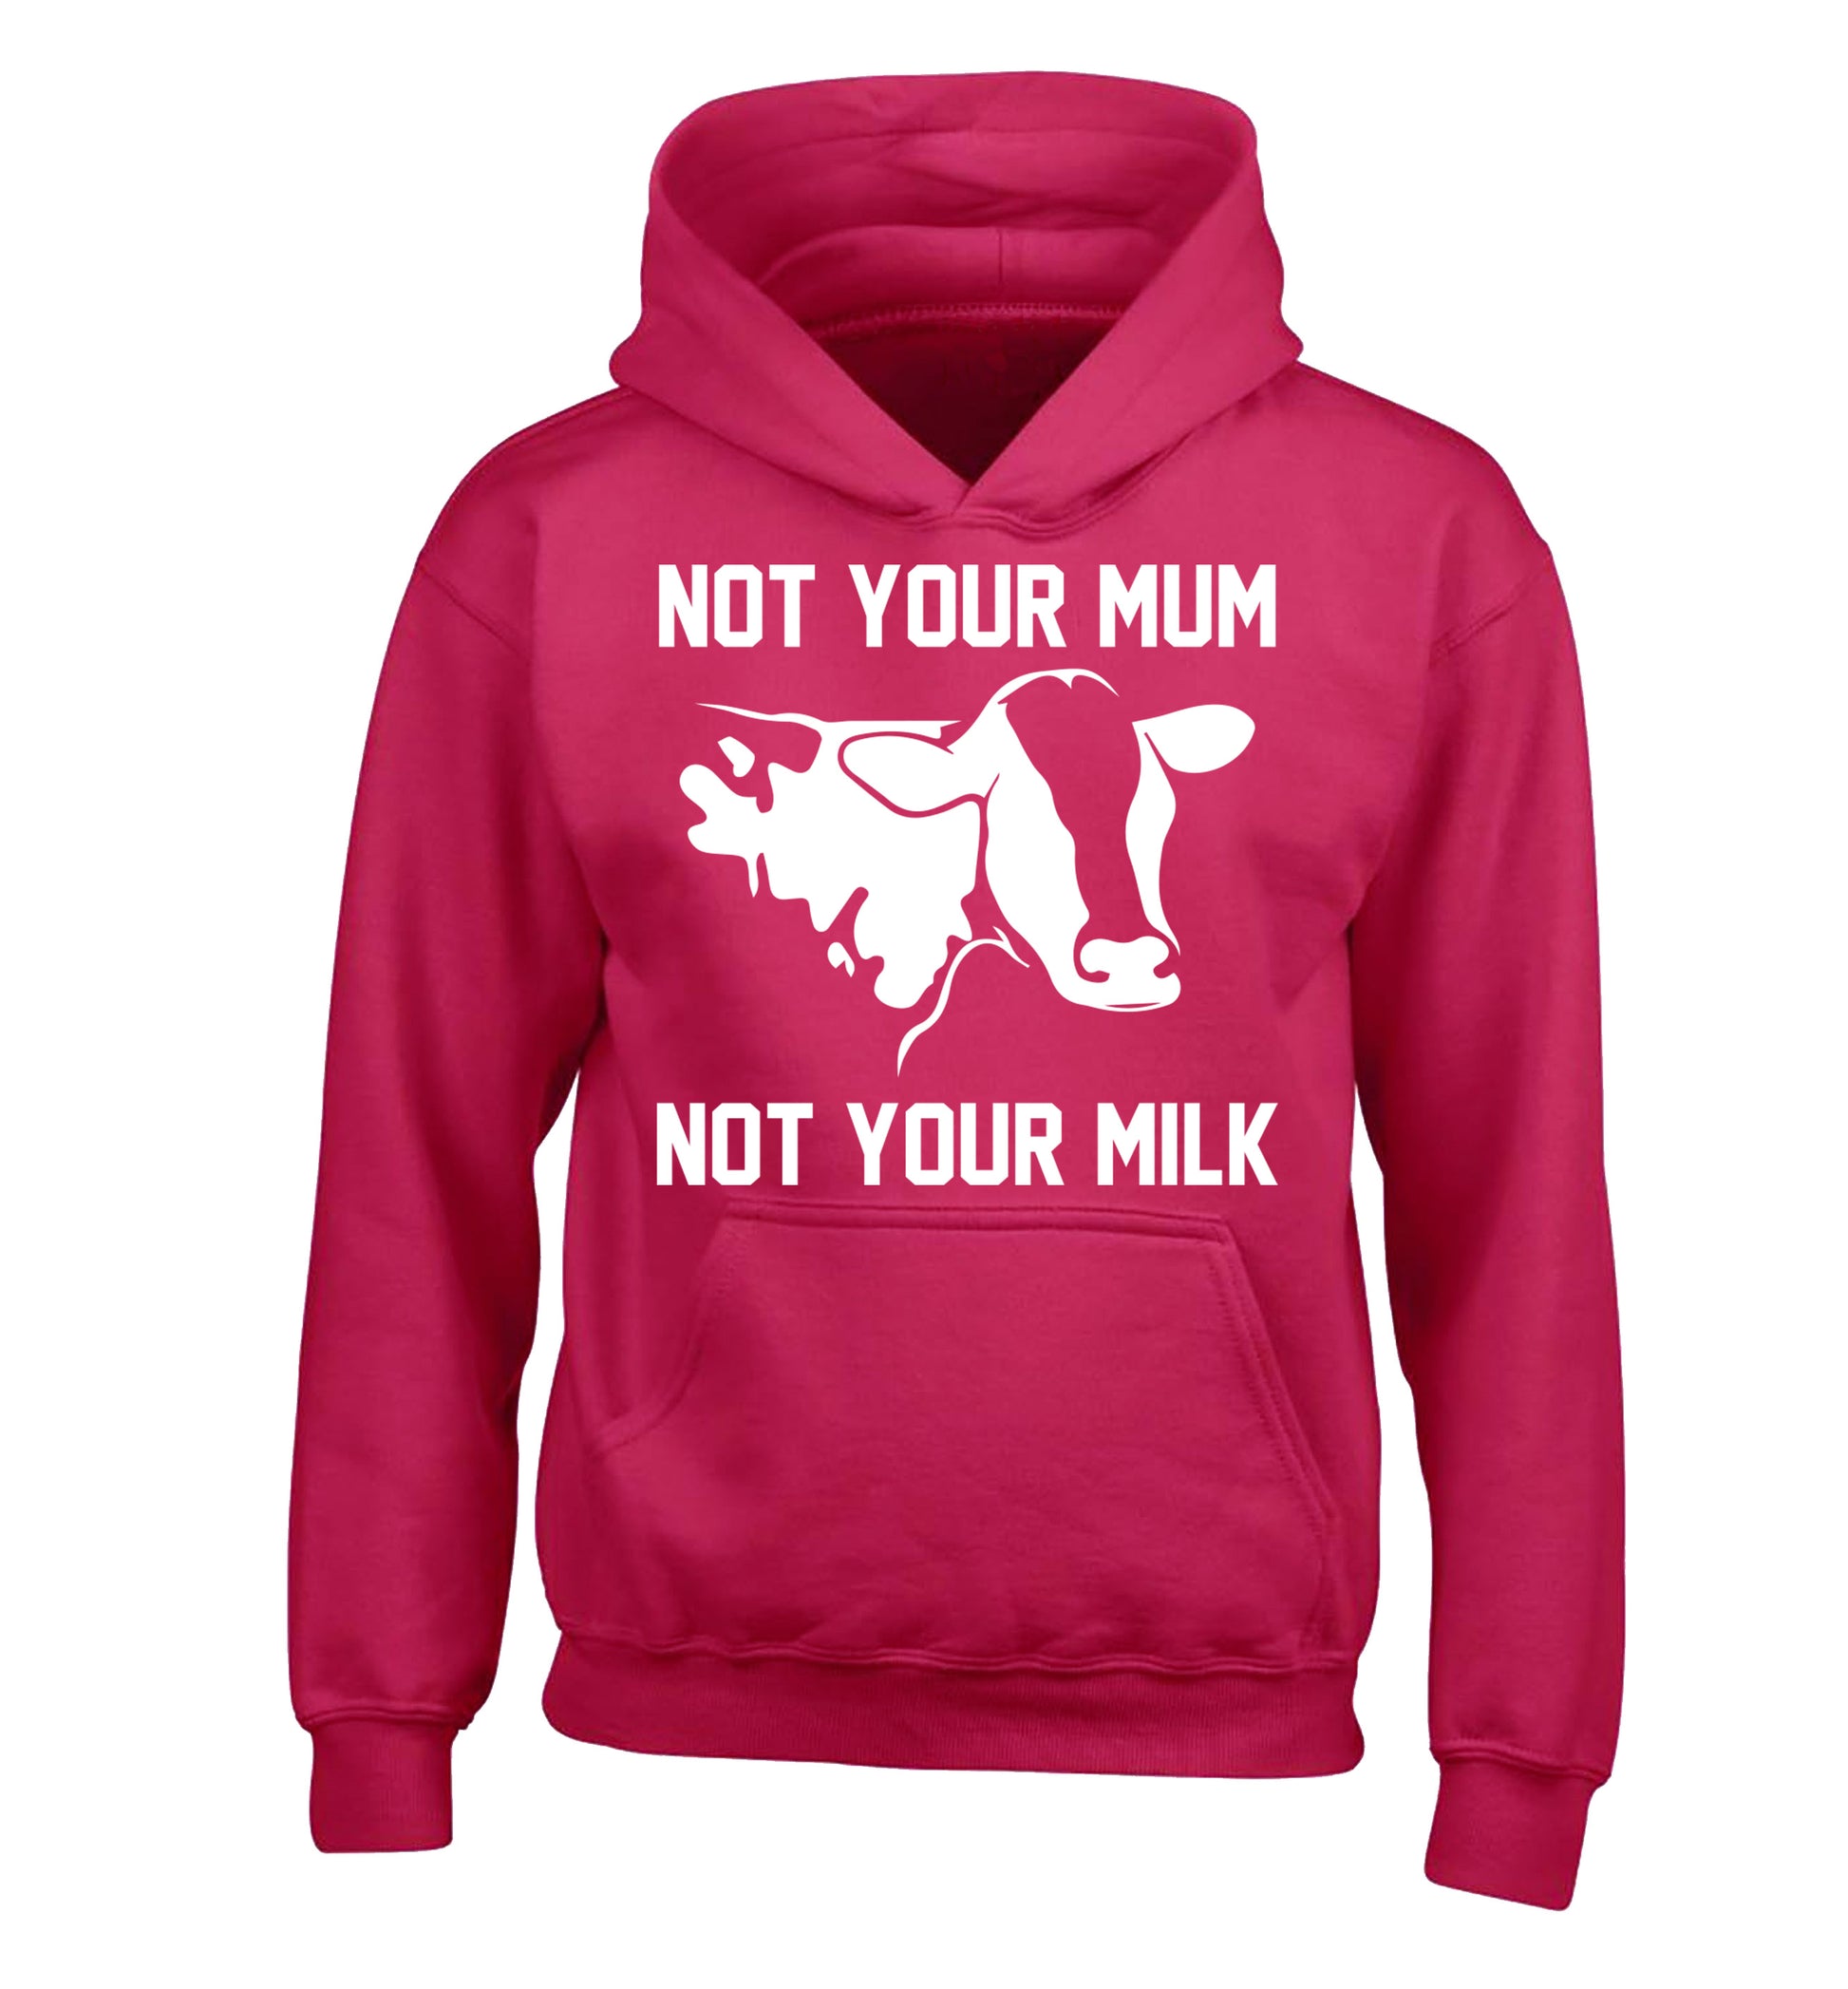 Not your mum not your milk children's pink hoodie 12-14 Years